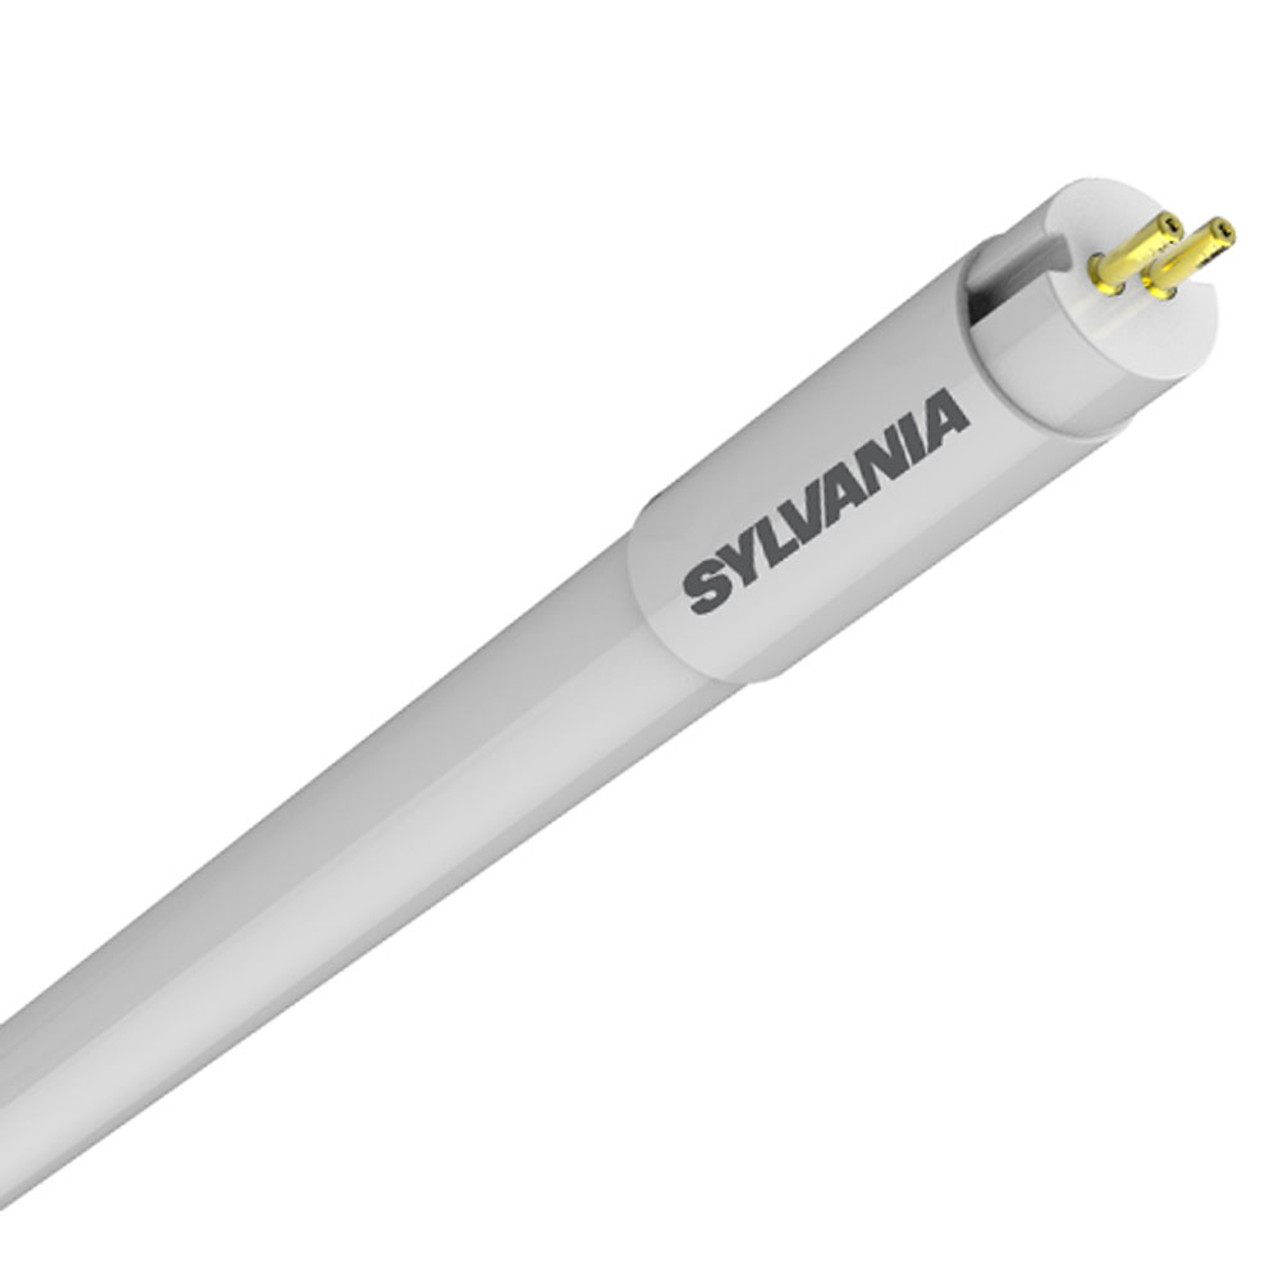 26W (54W) LED T5 Tube Cool White 1149mm 3900lm AC Mains Sylvania